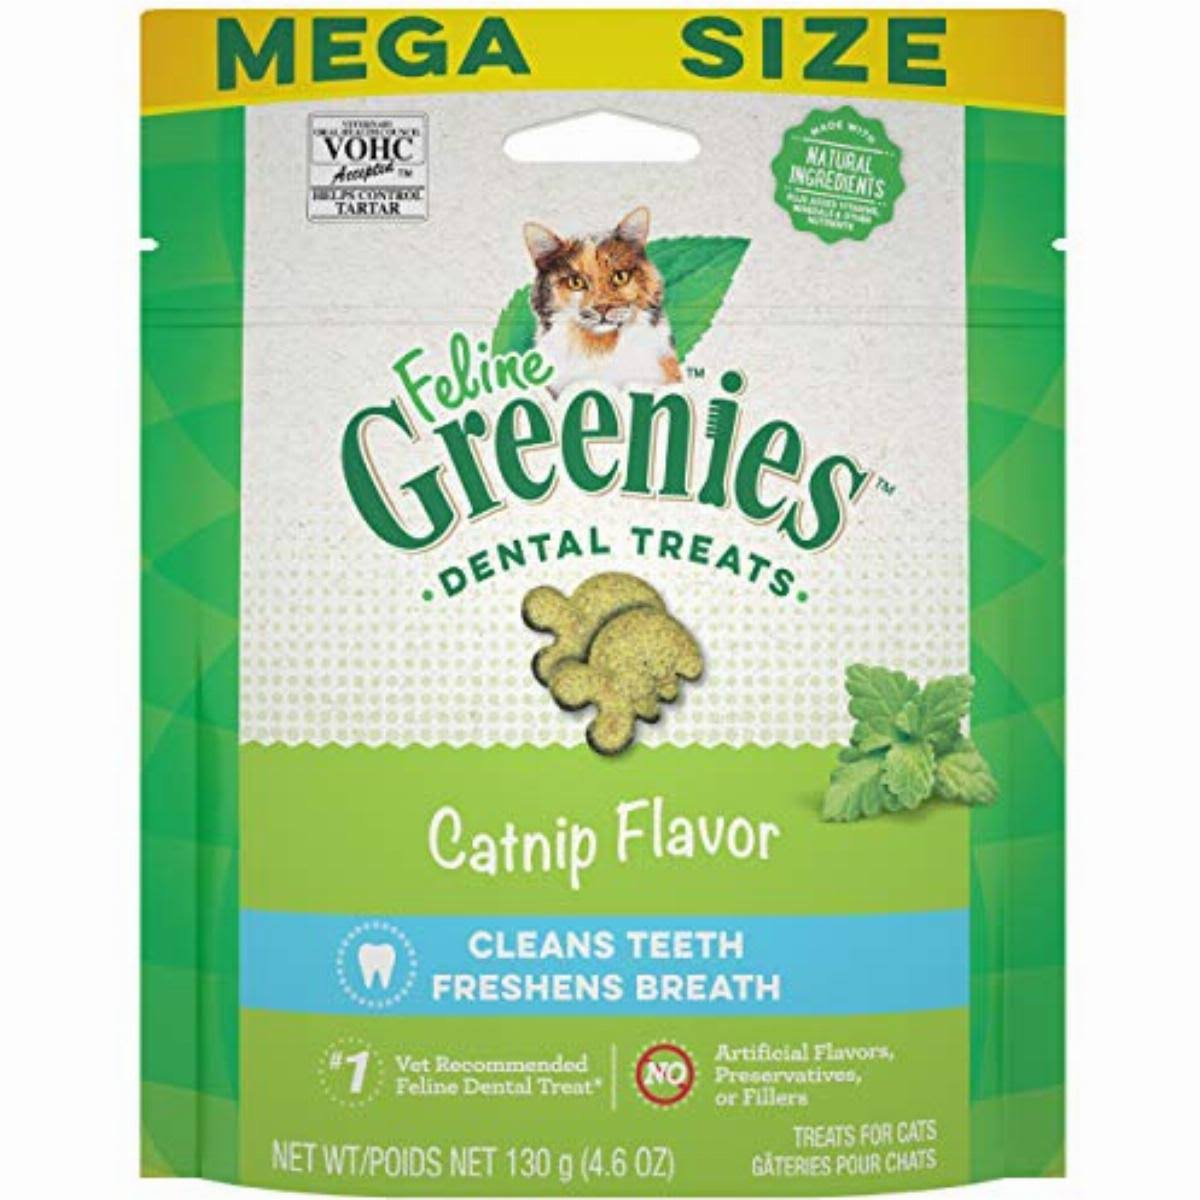 Greenies Feline Crunchy Dental Treats Catnip Flavor Mega Size 4.06 Ounces